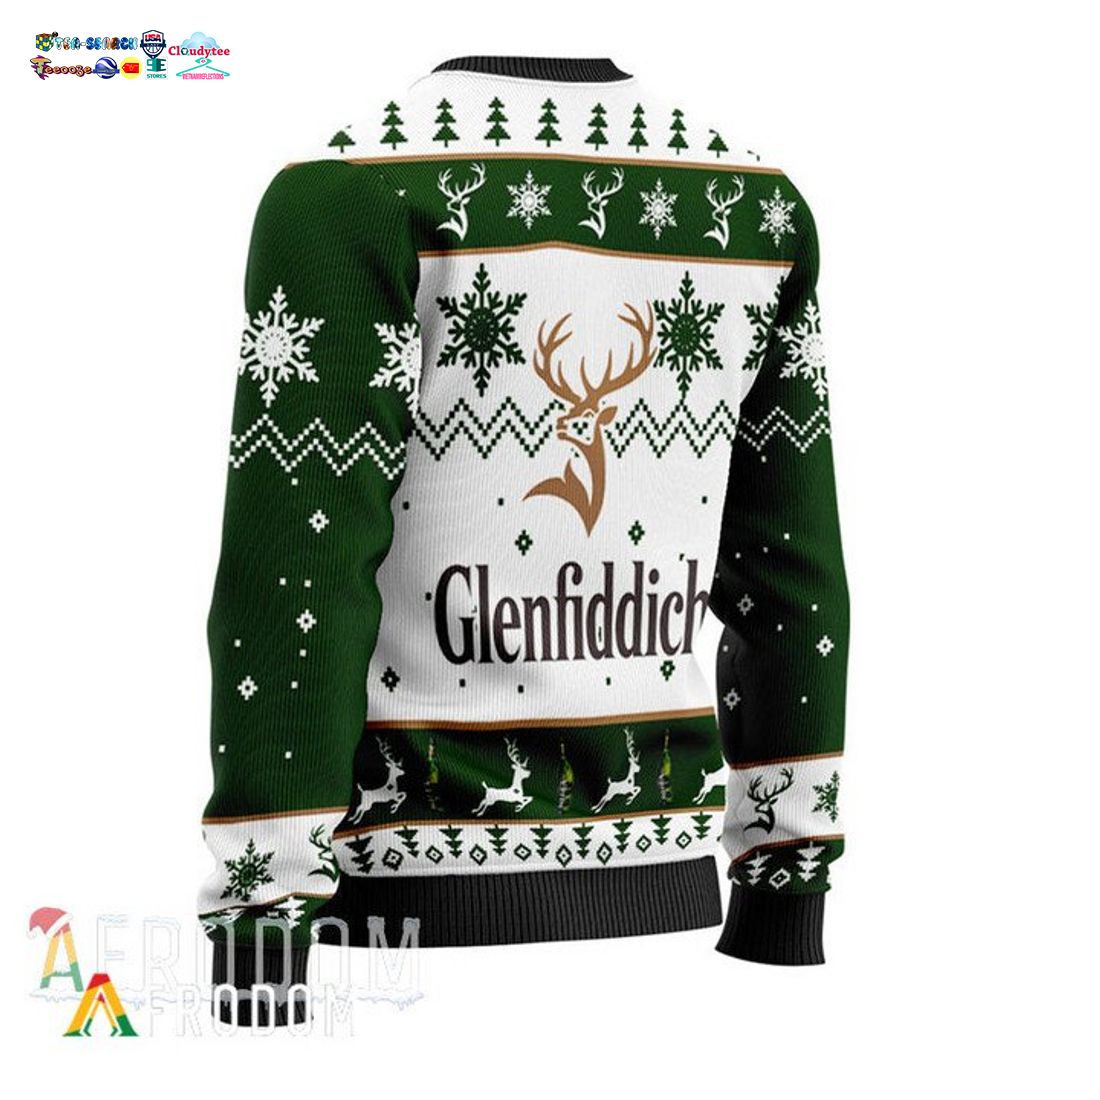 Glenfiddich Ugly Christmas Sweater - saleoff